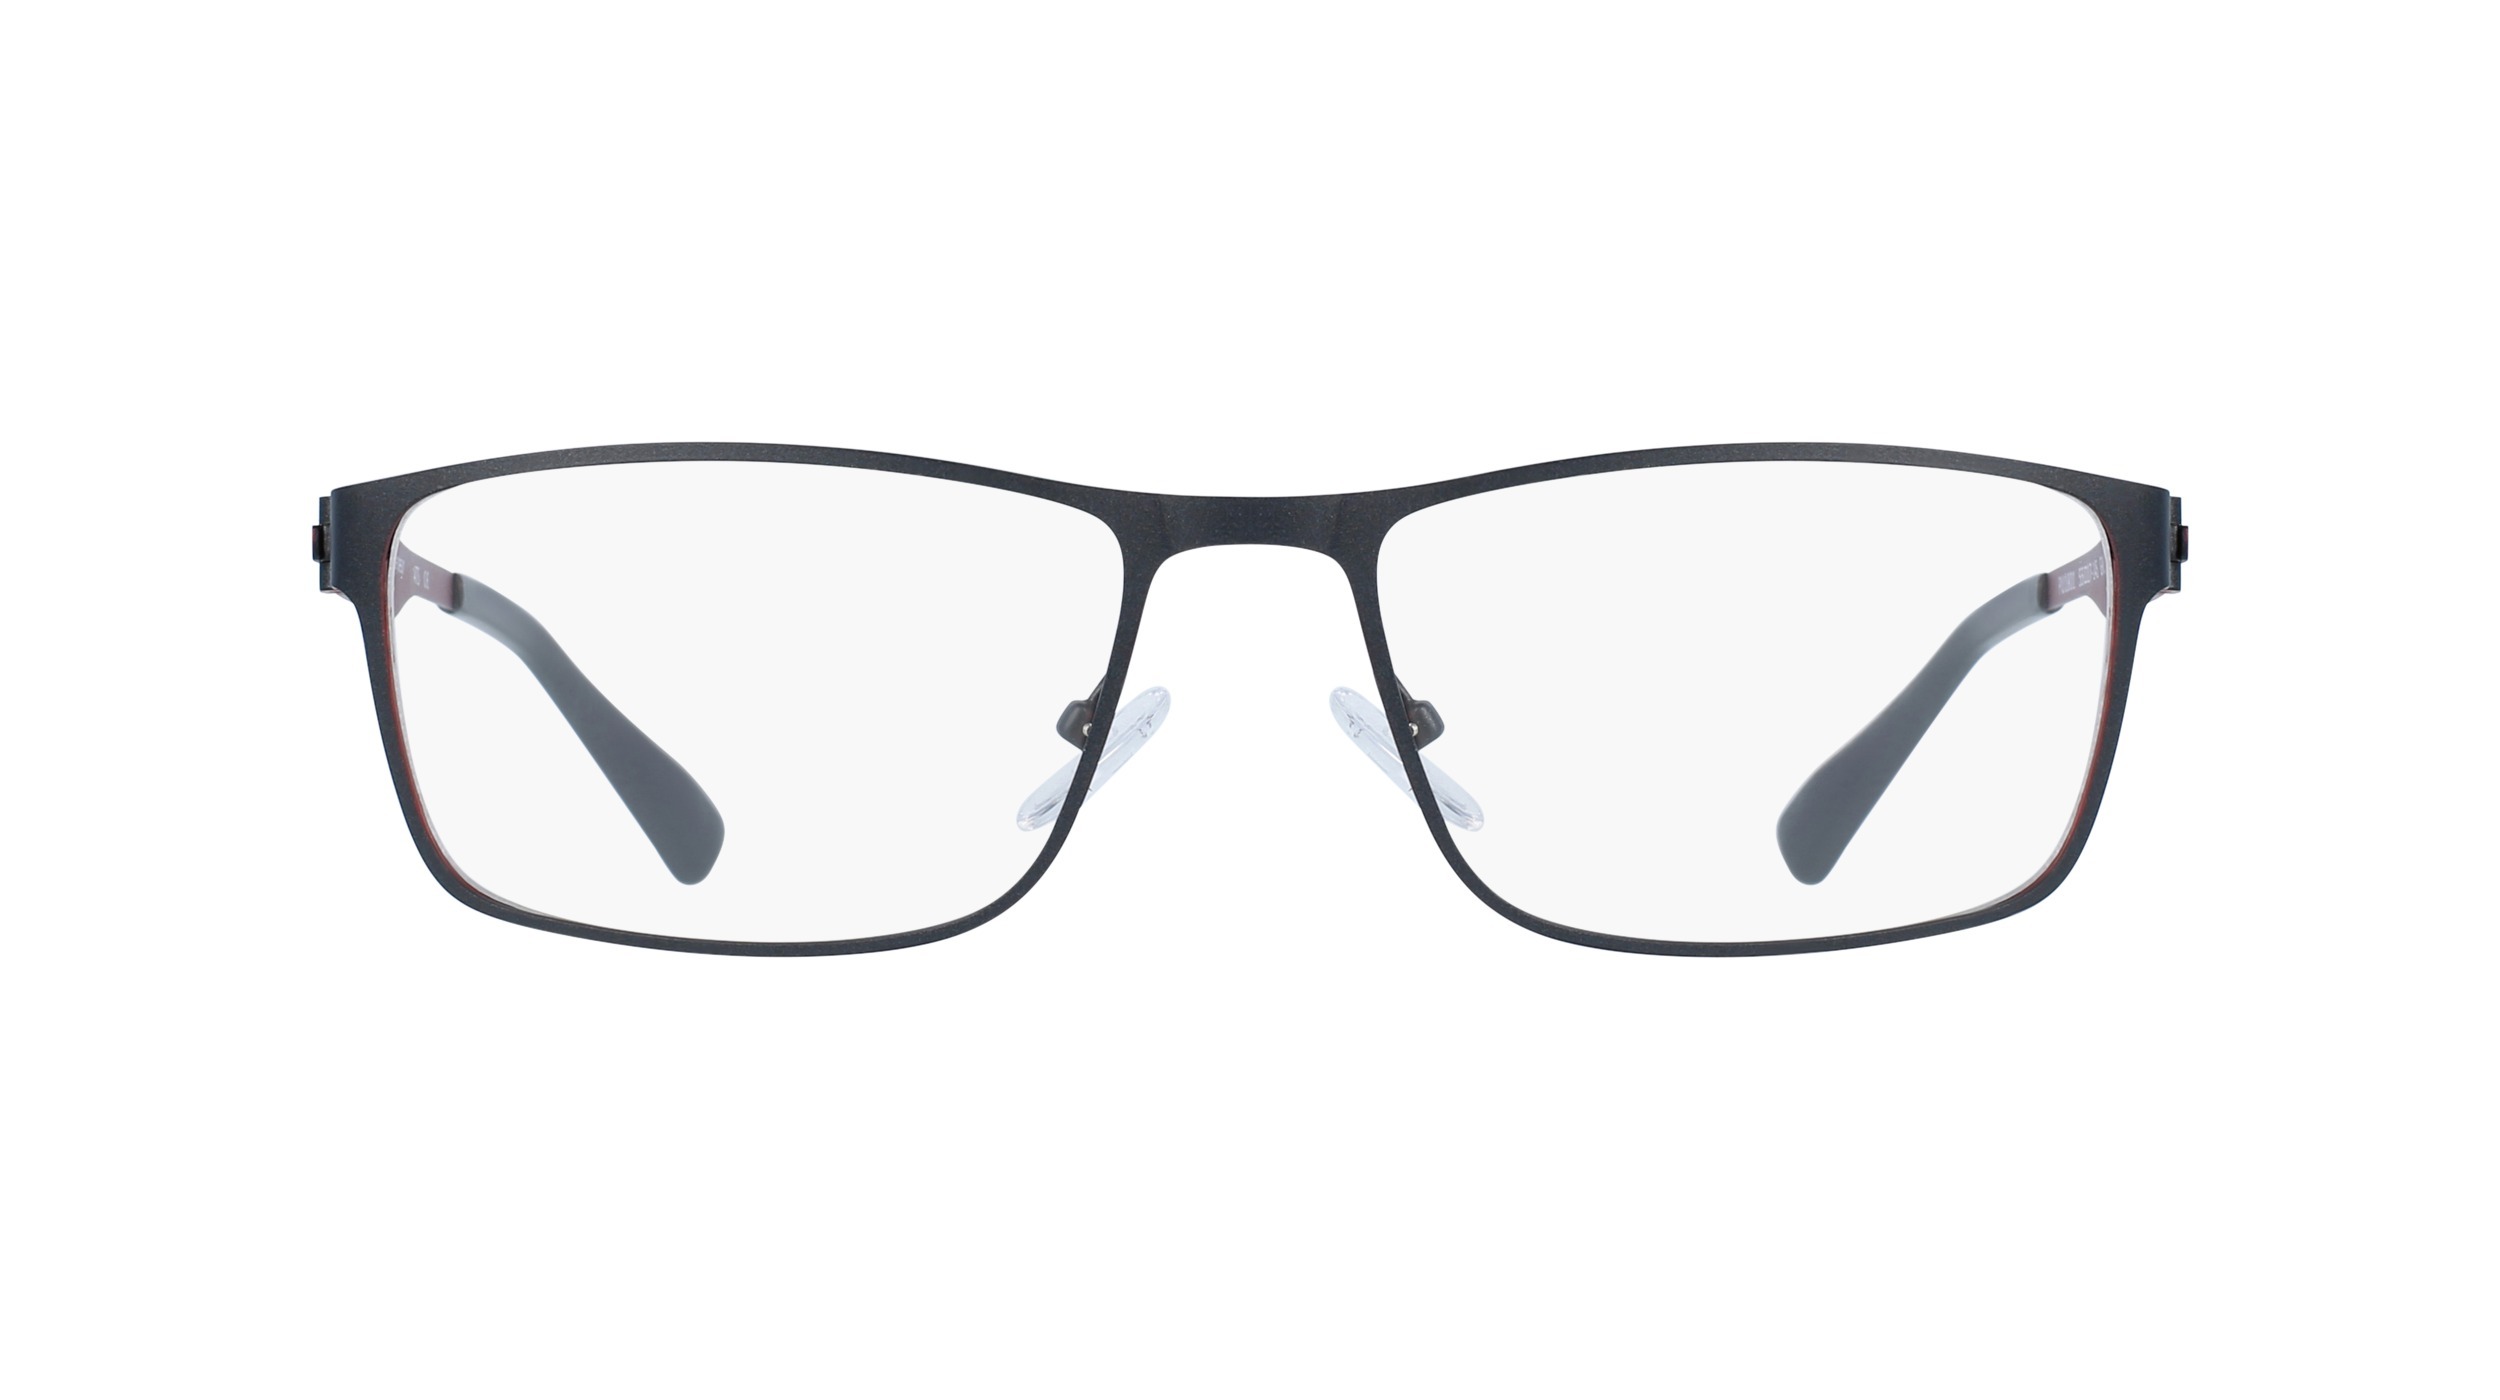 optic2000-lunettes-puredesign